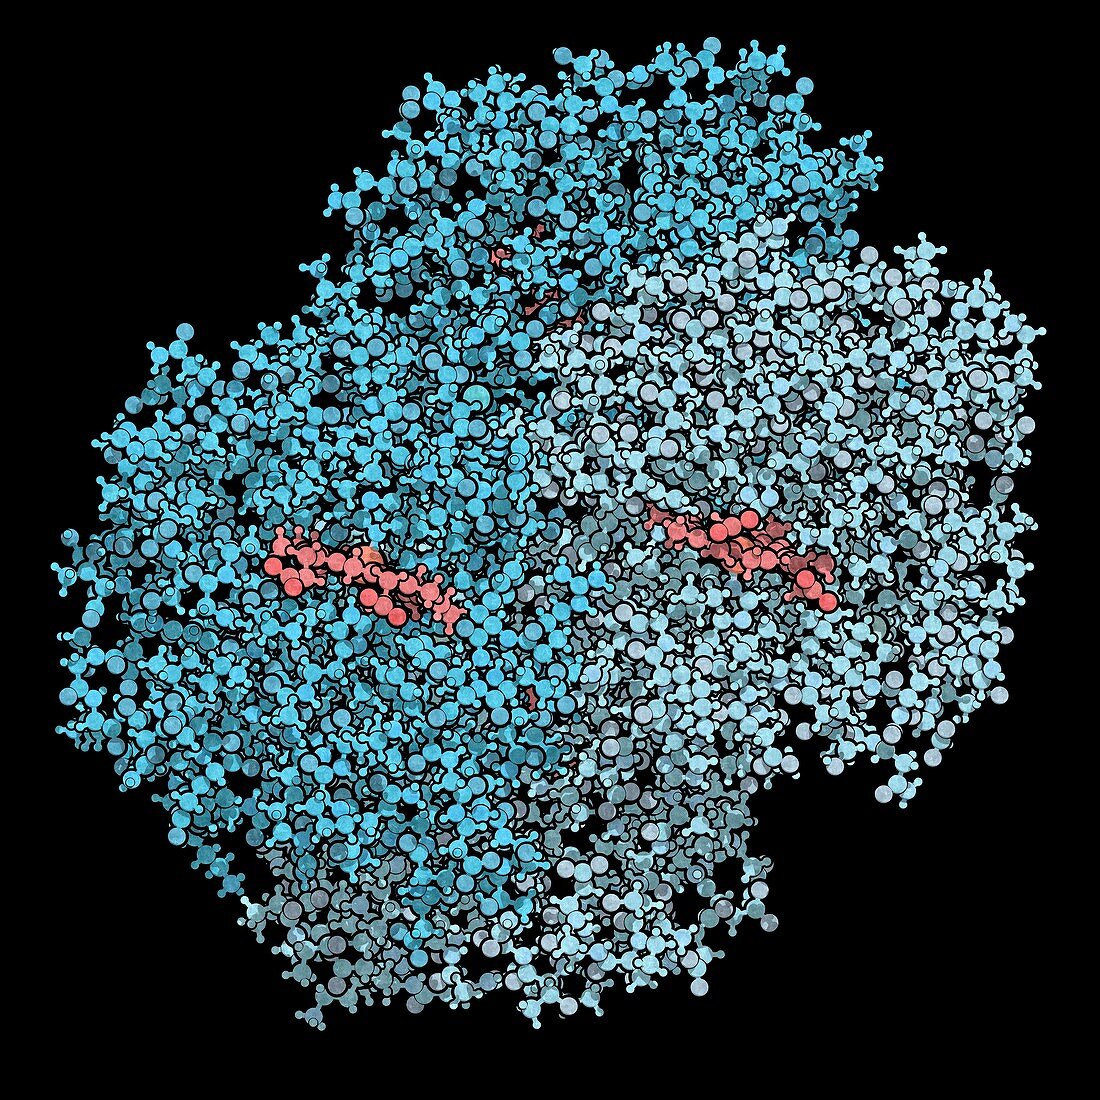 Haemoglobin protein molecule, illustration